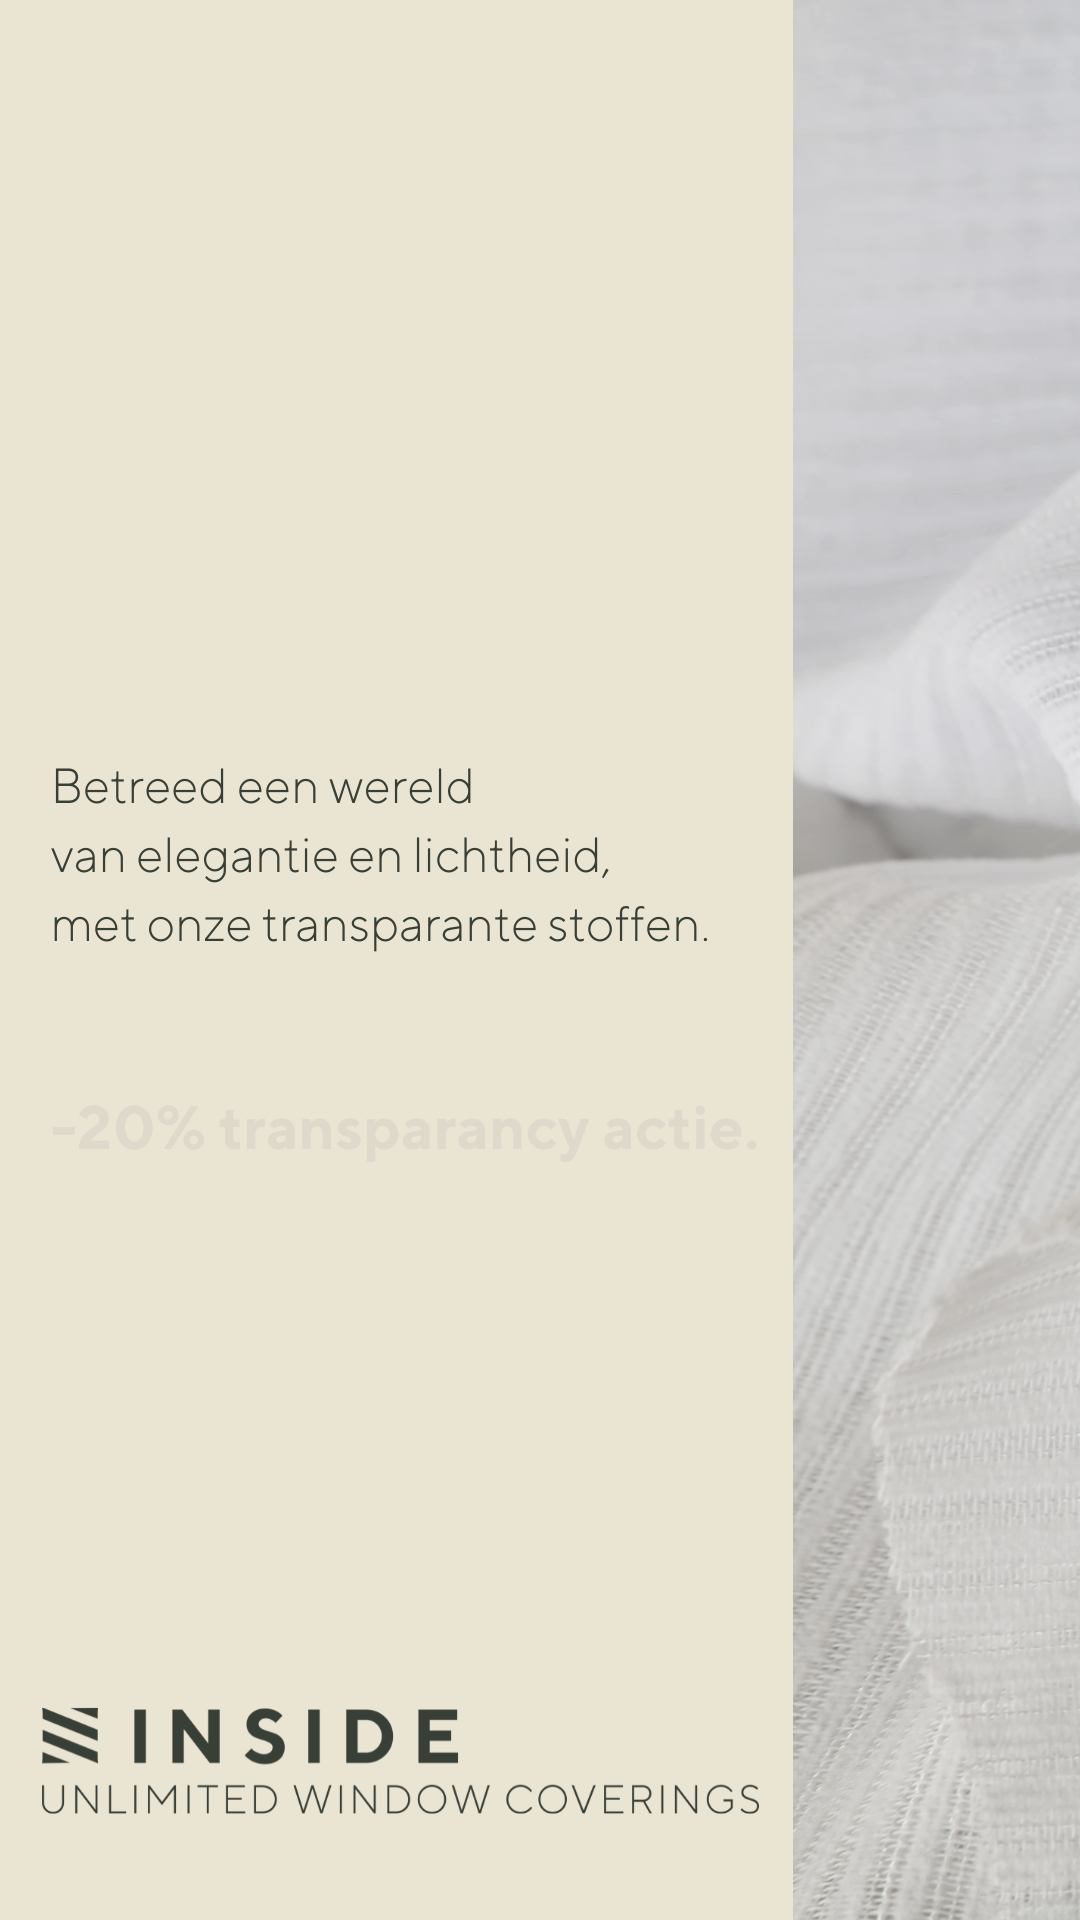 Inside Blinds transparency actie pop up NL